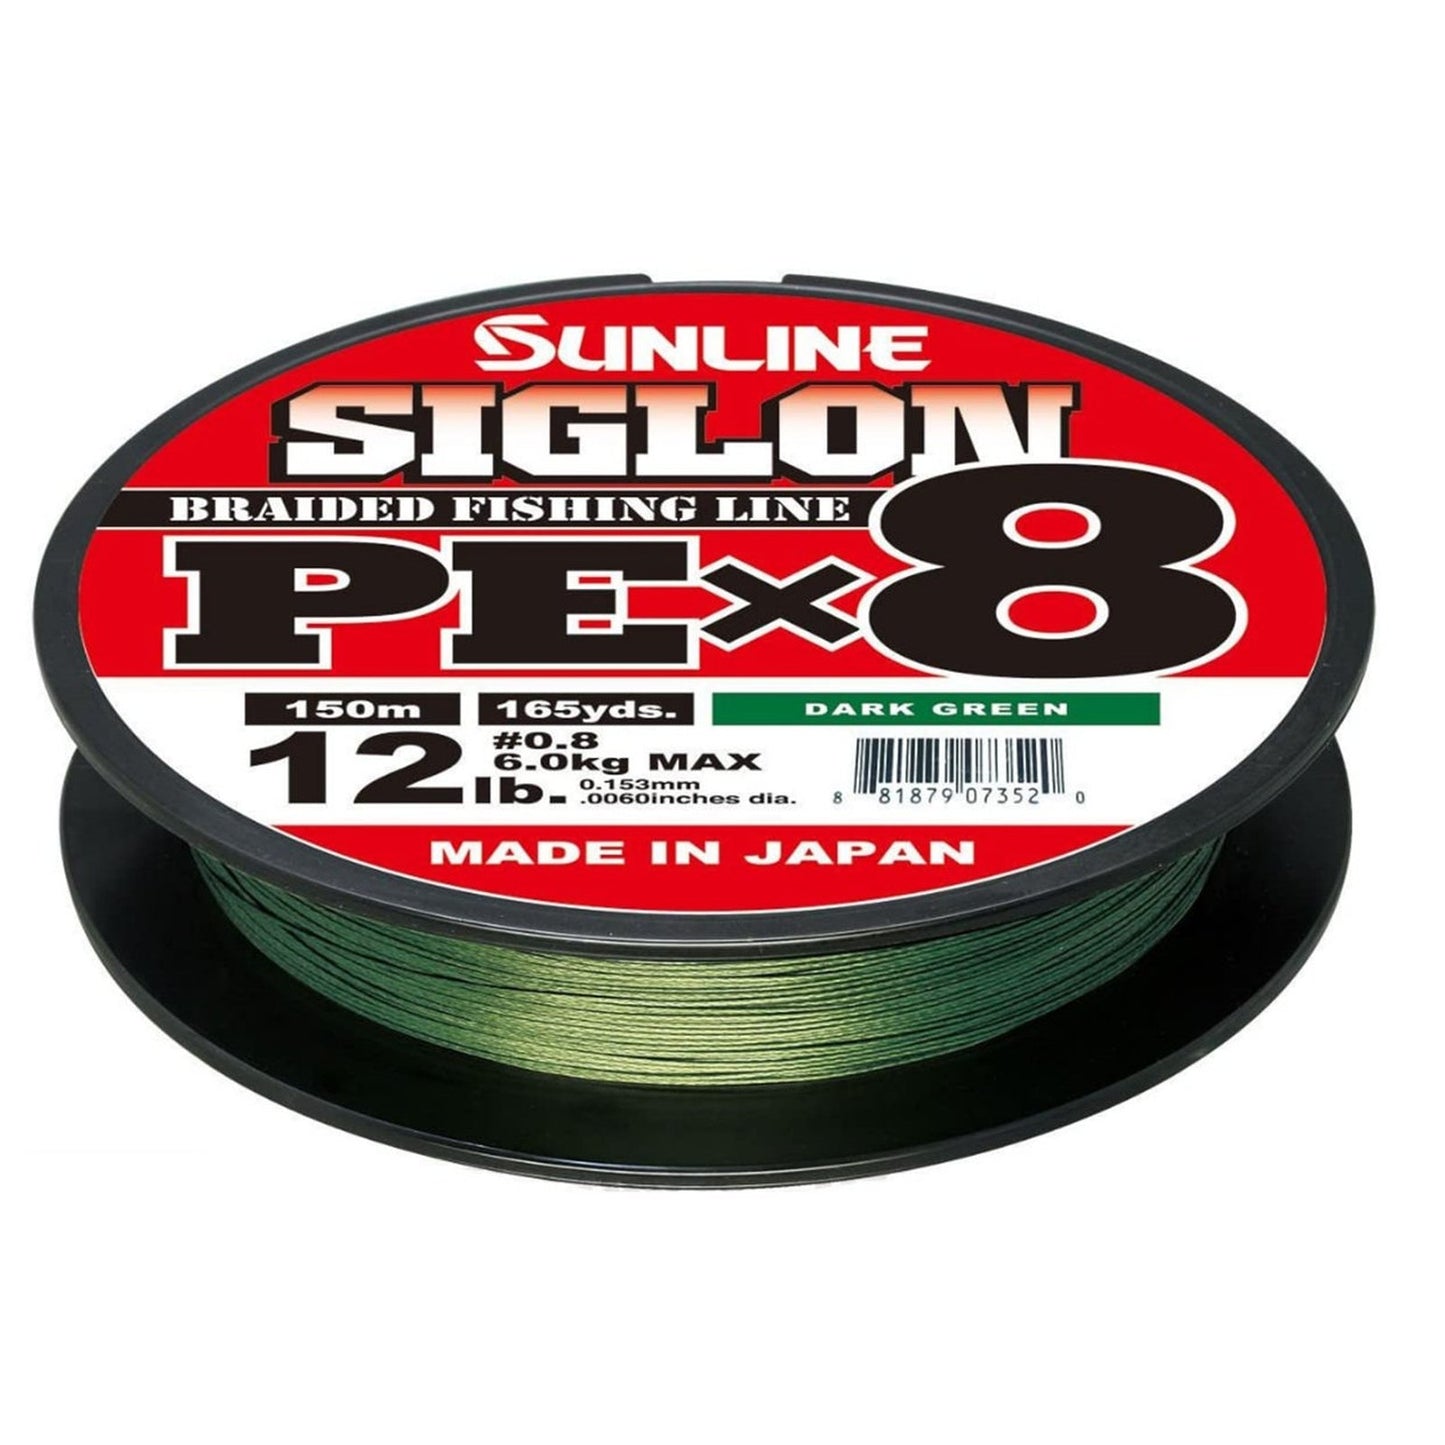 Sunline Siglon PE X8 150m Dark Green